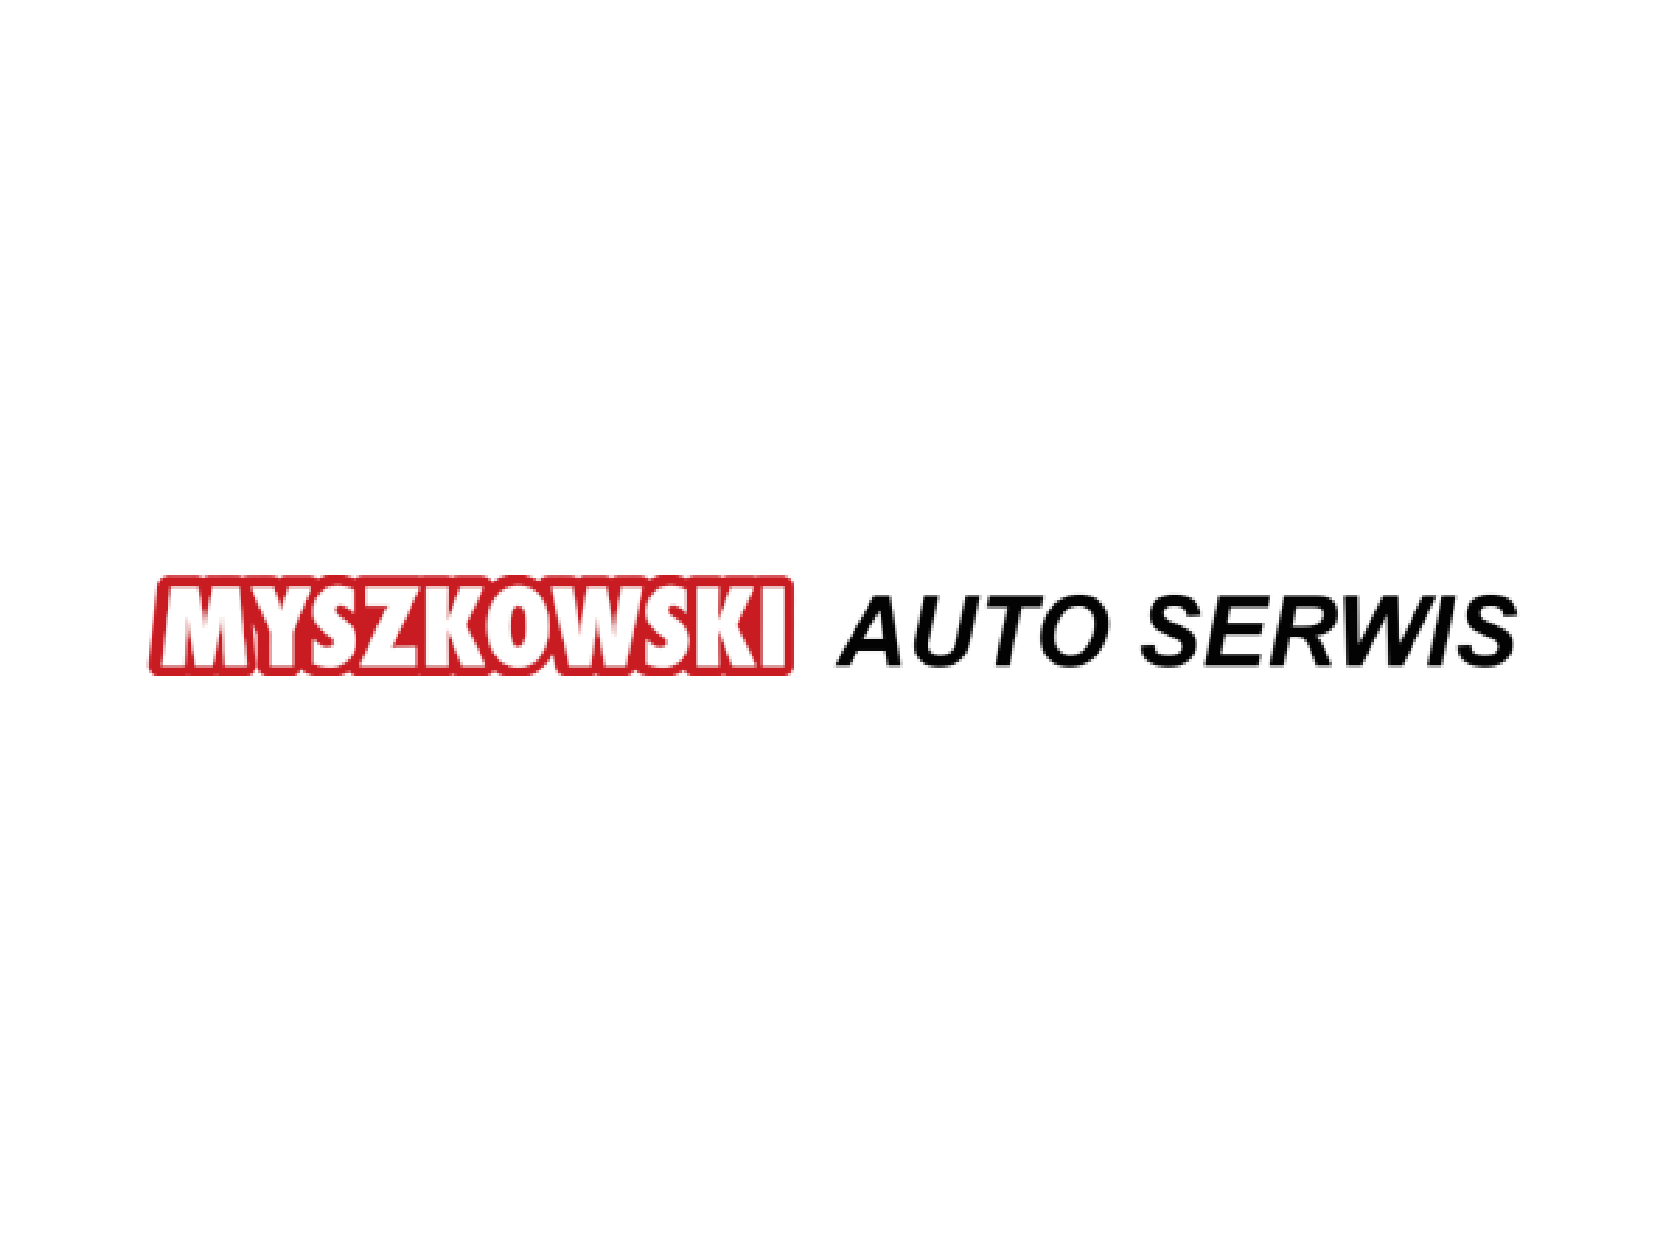 Myszkowski Auto Serwis